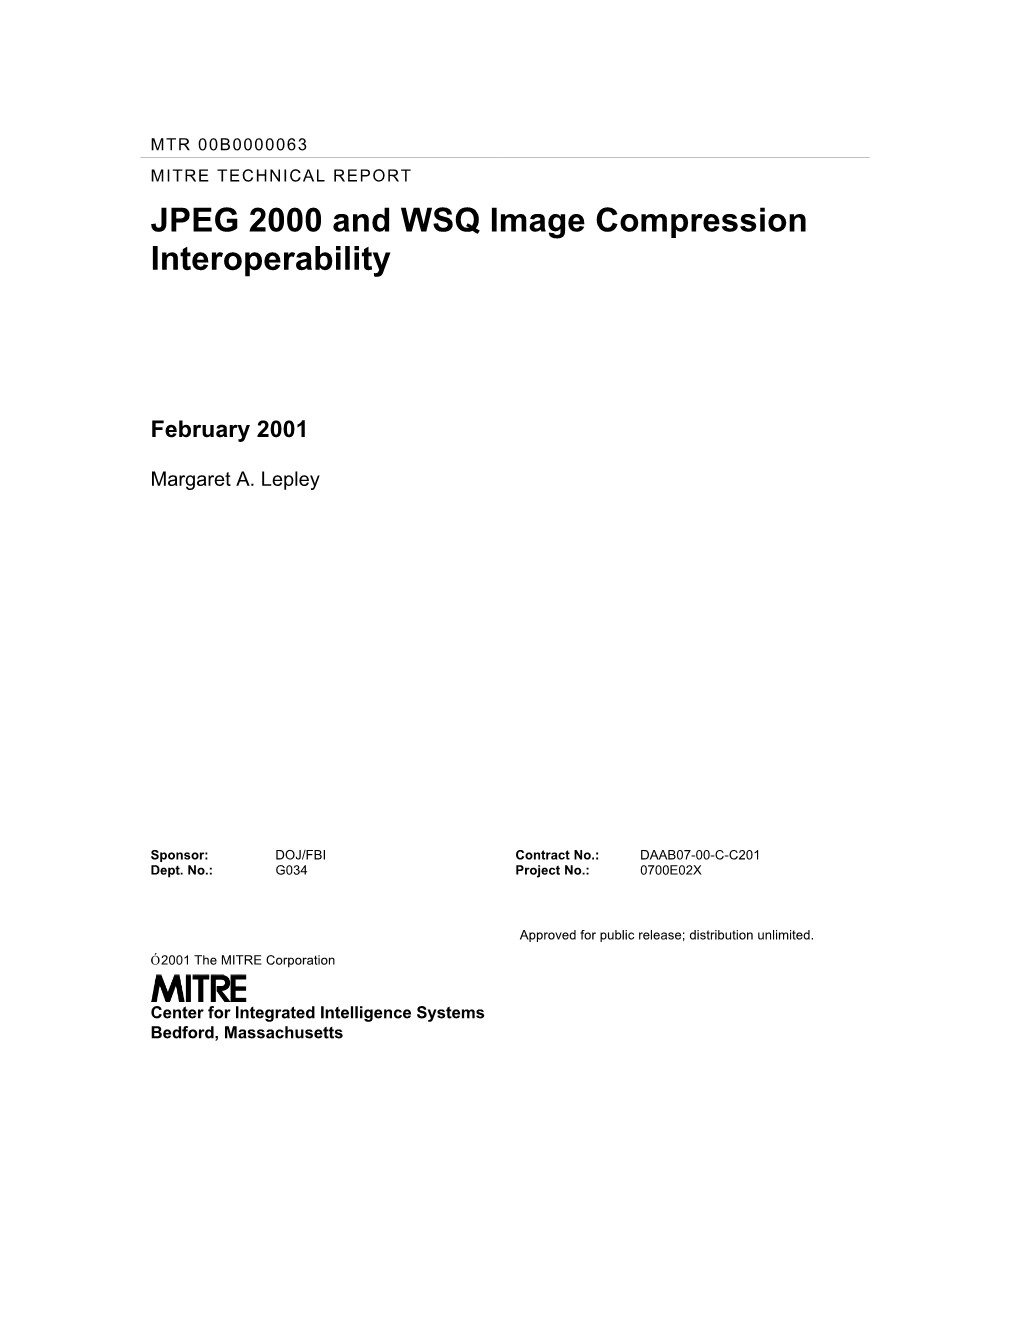 JPEG 2000 and WSQ Image Compression Interoperability